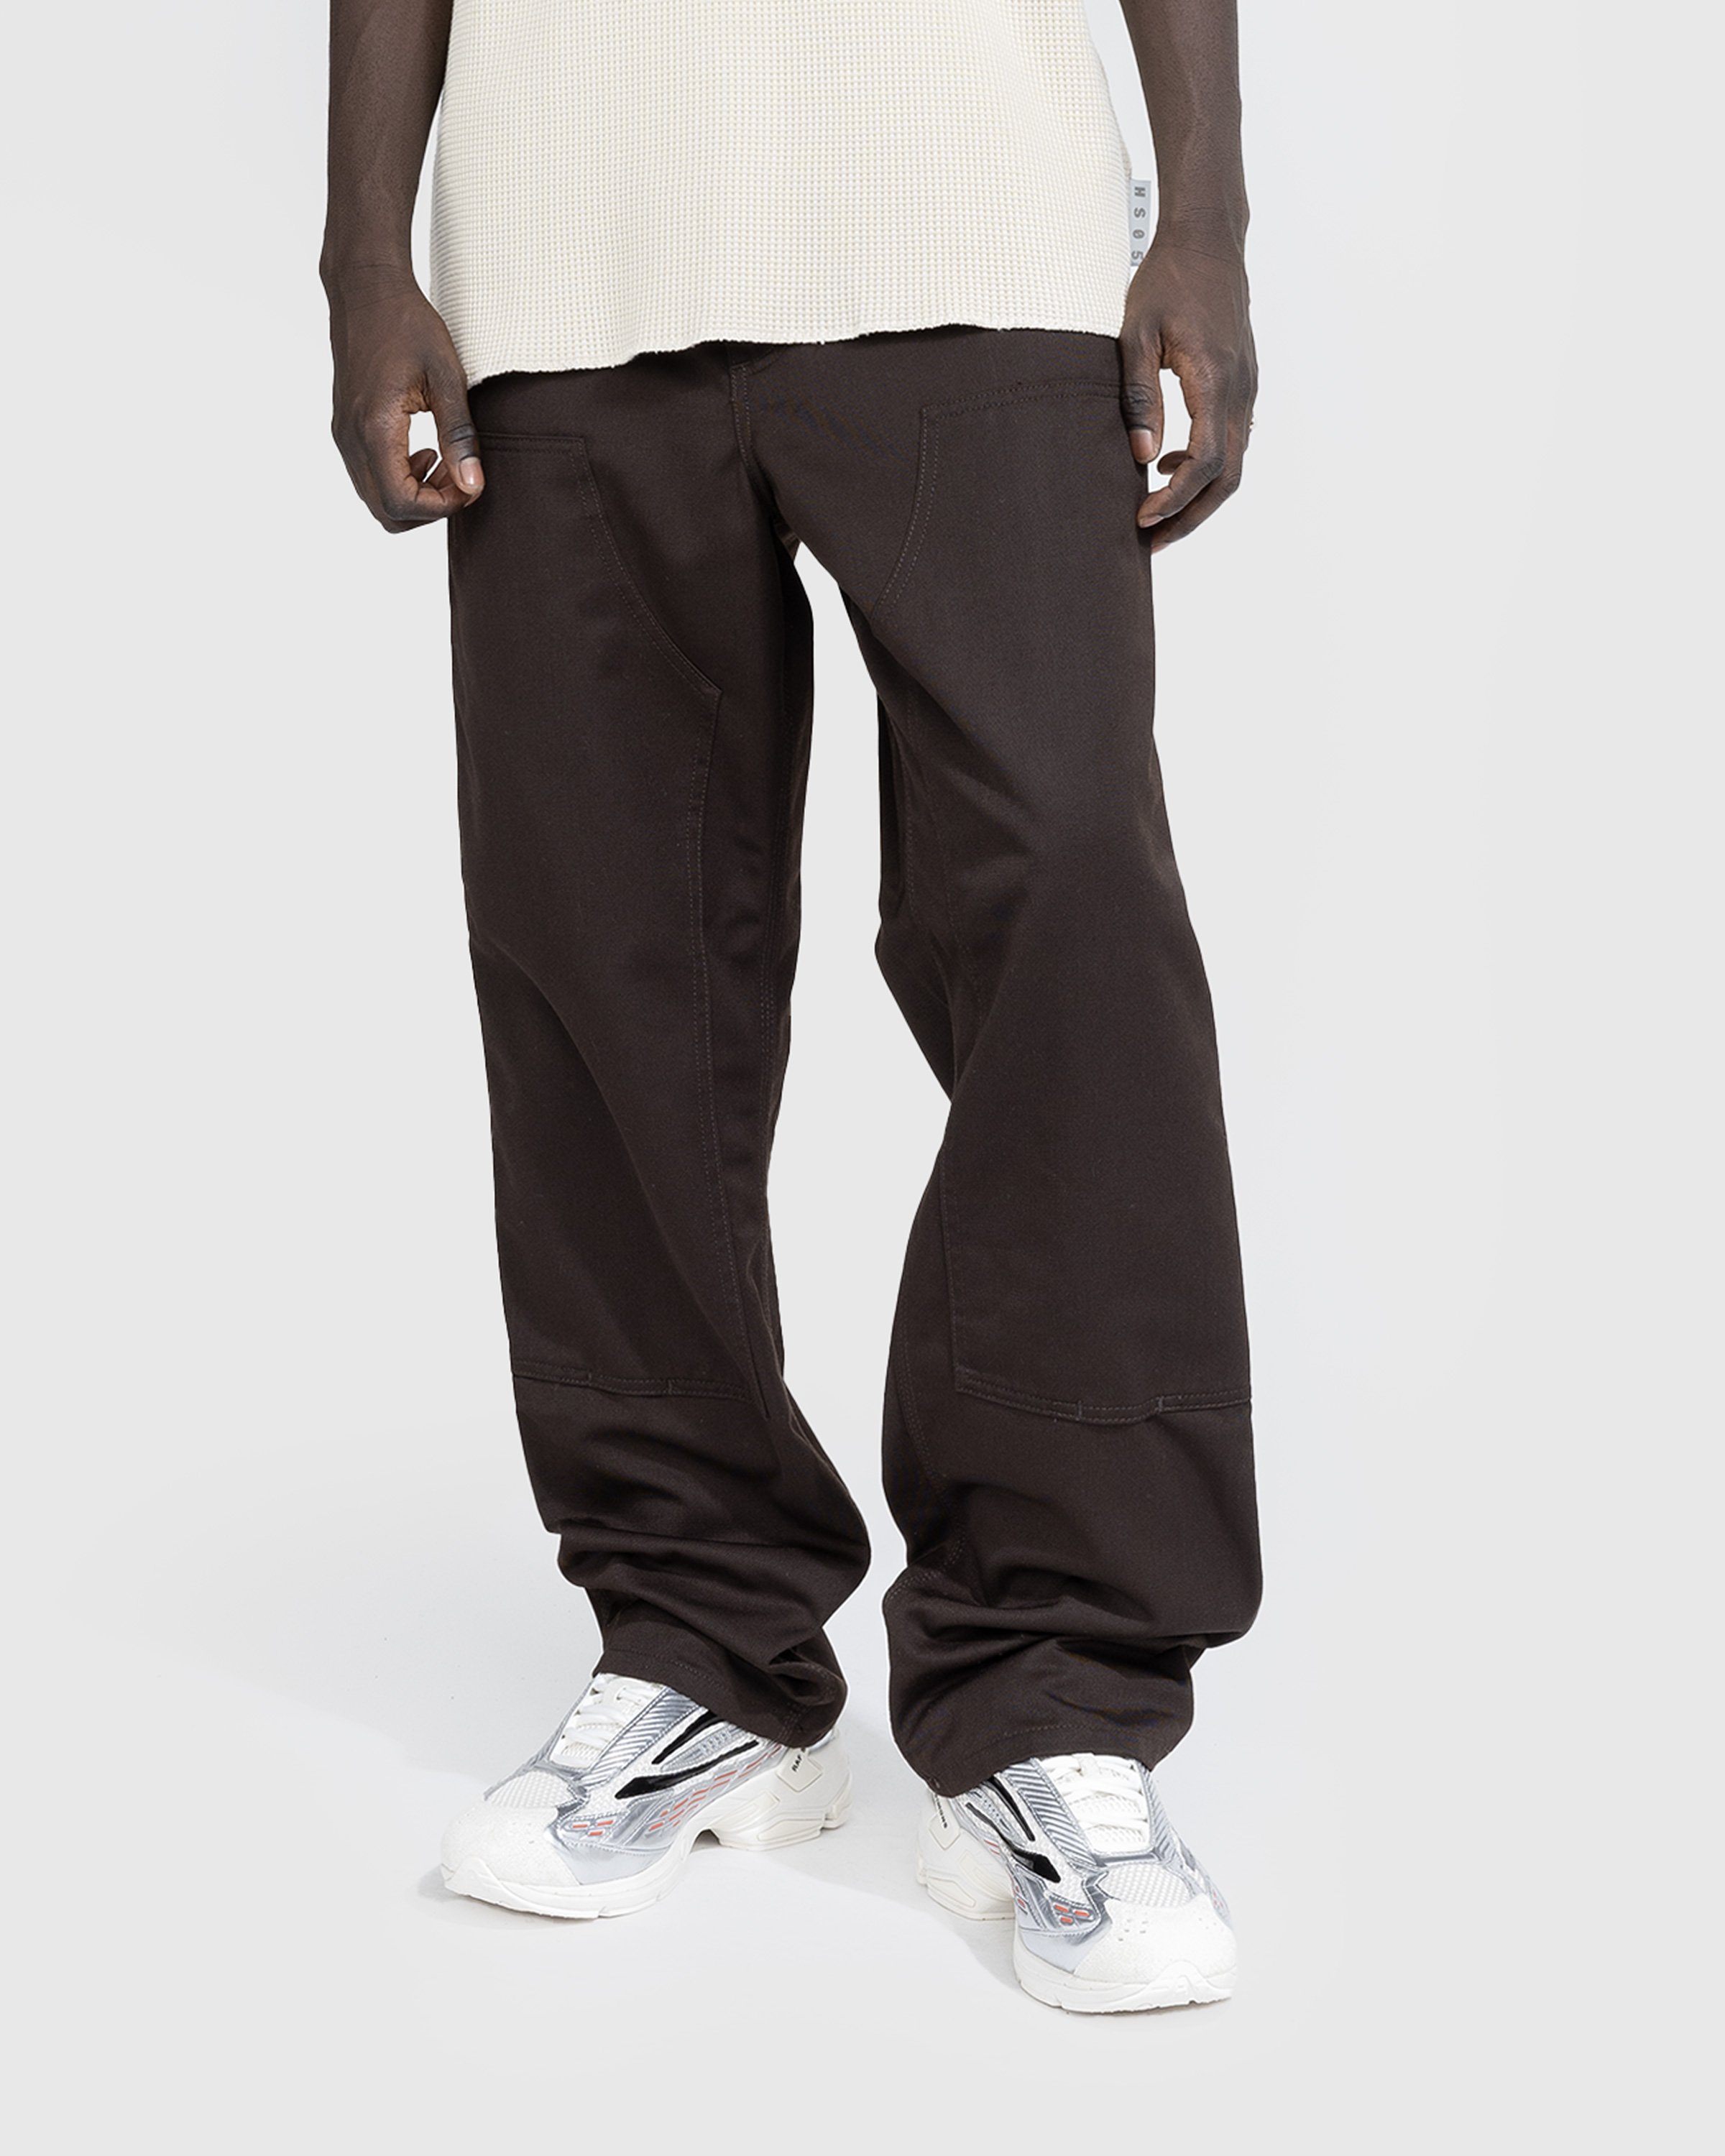 Carhartt WIP - Double Knee Pant Tobacco/Rinsed - Clothing - Brown - Image 2